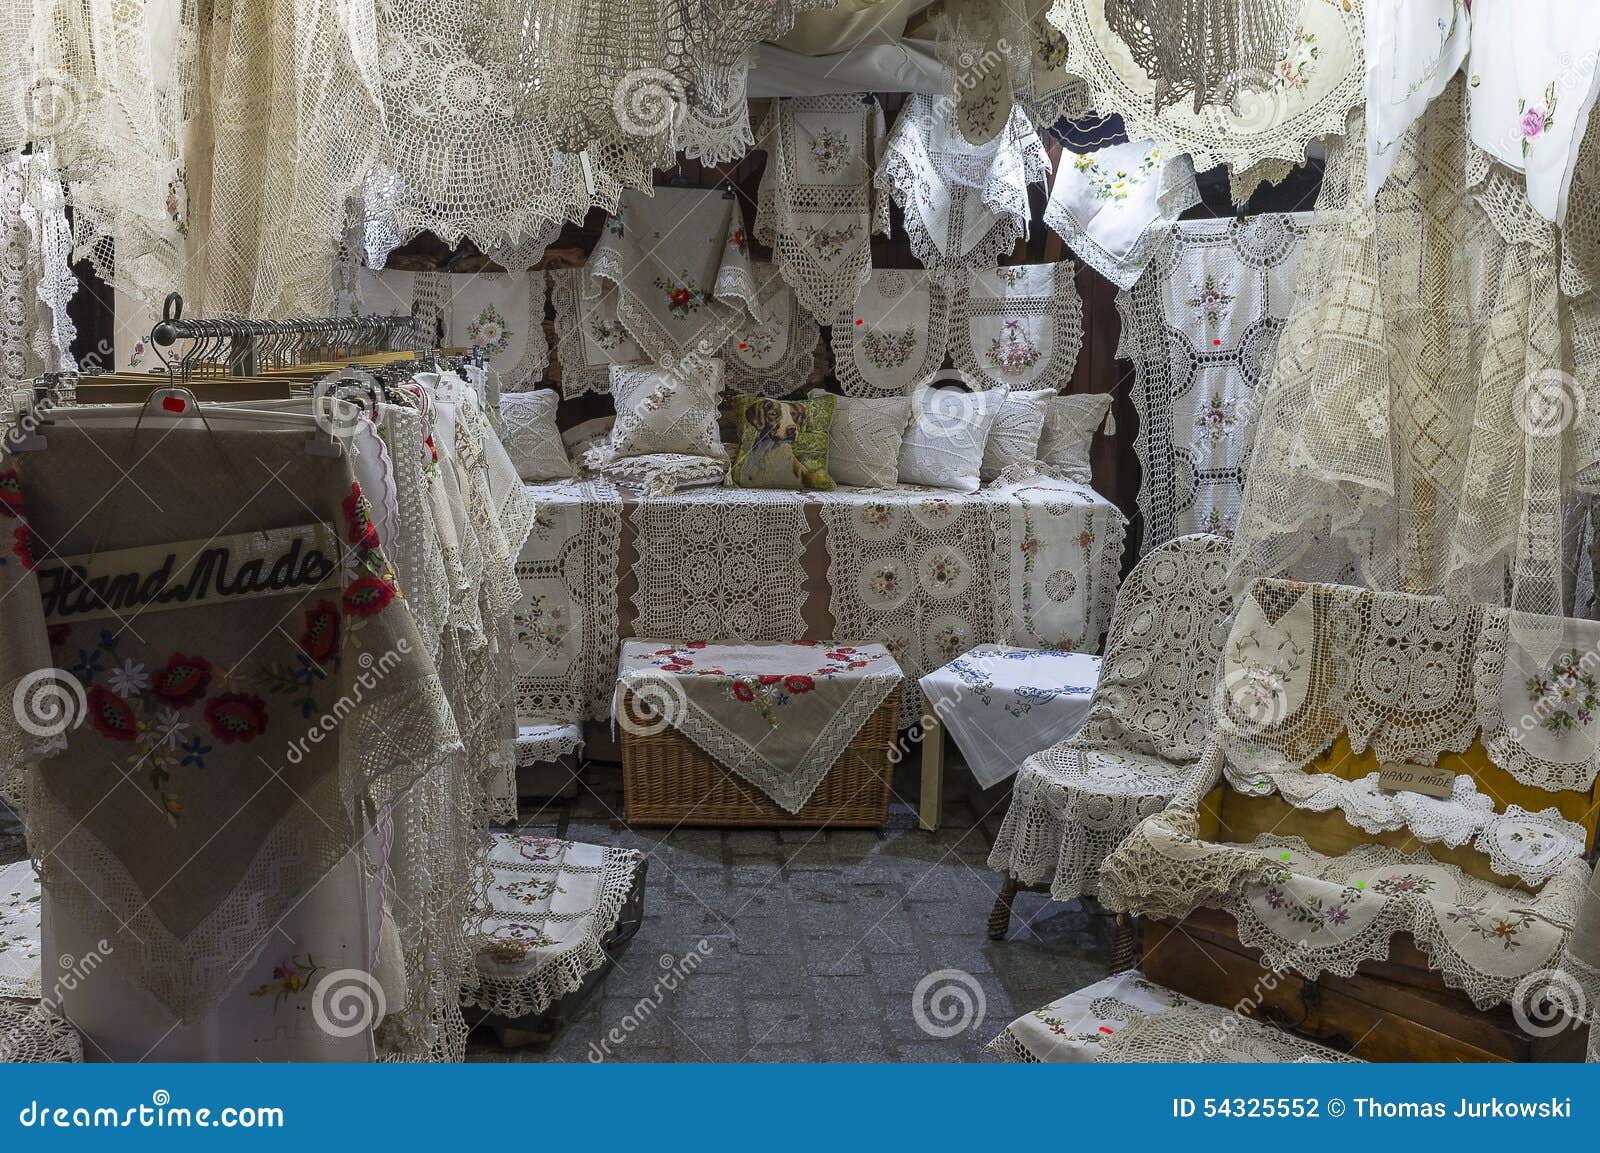 handmade curtains and tablecloths